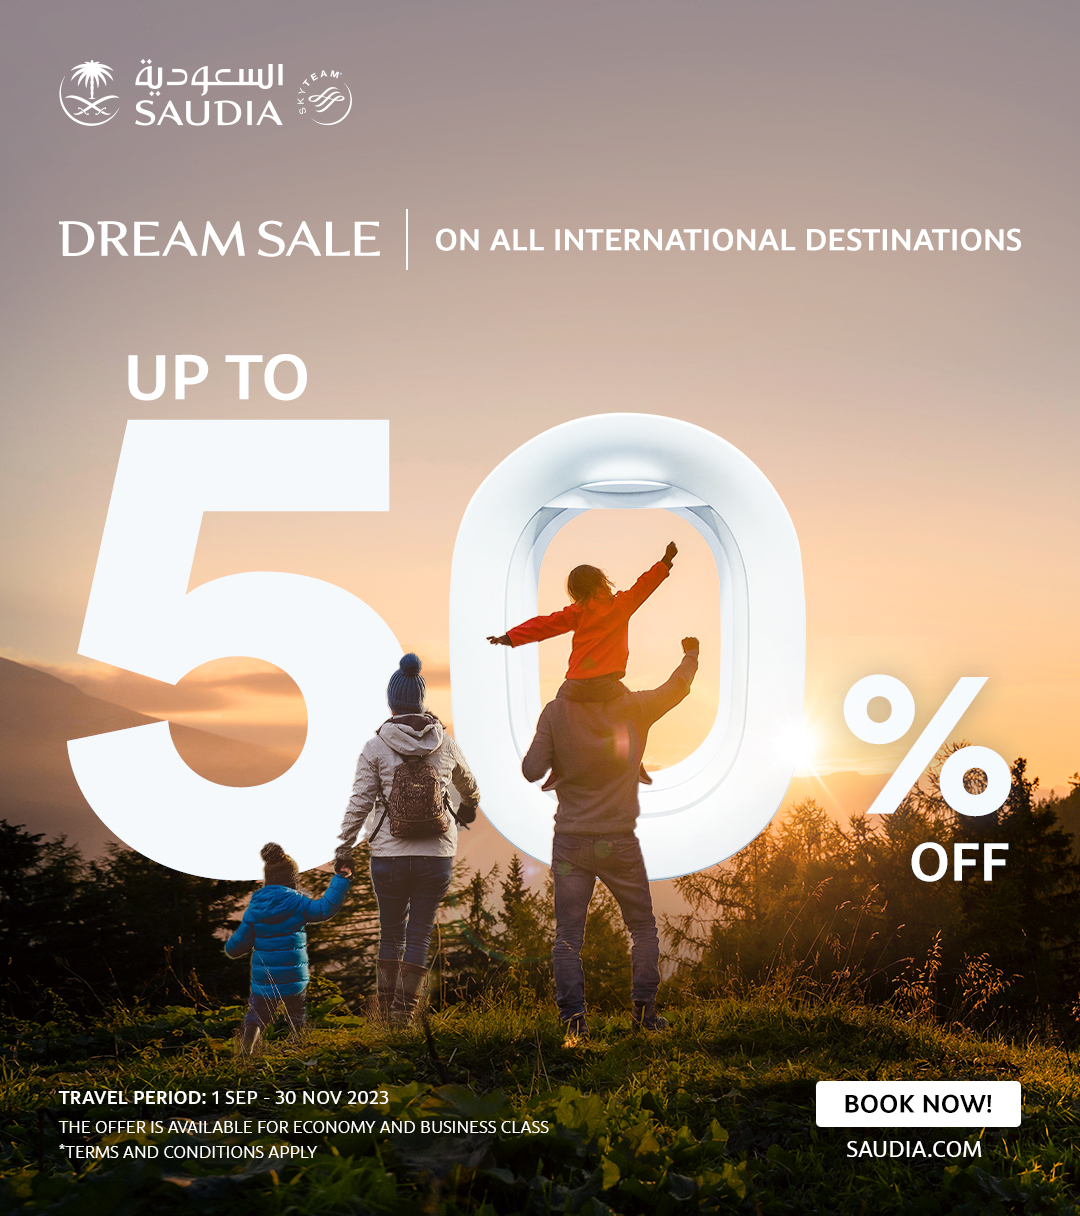 SAUDIA announces 50 discount on flights between the kingdom of saudi